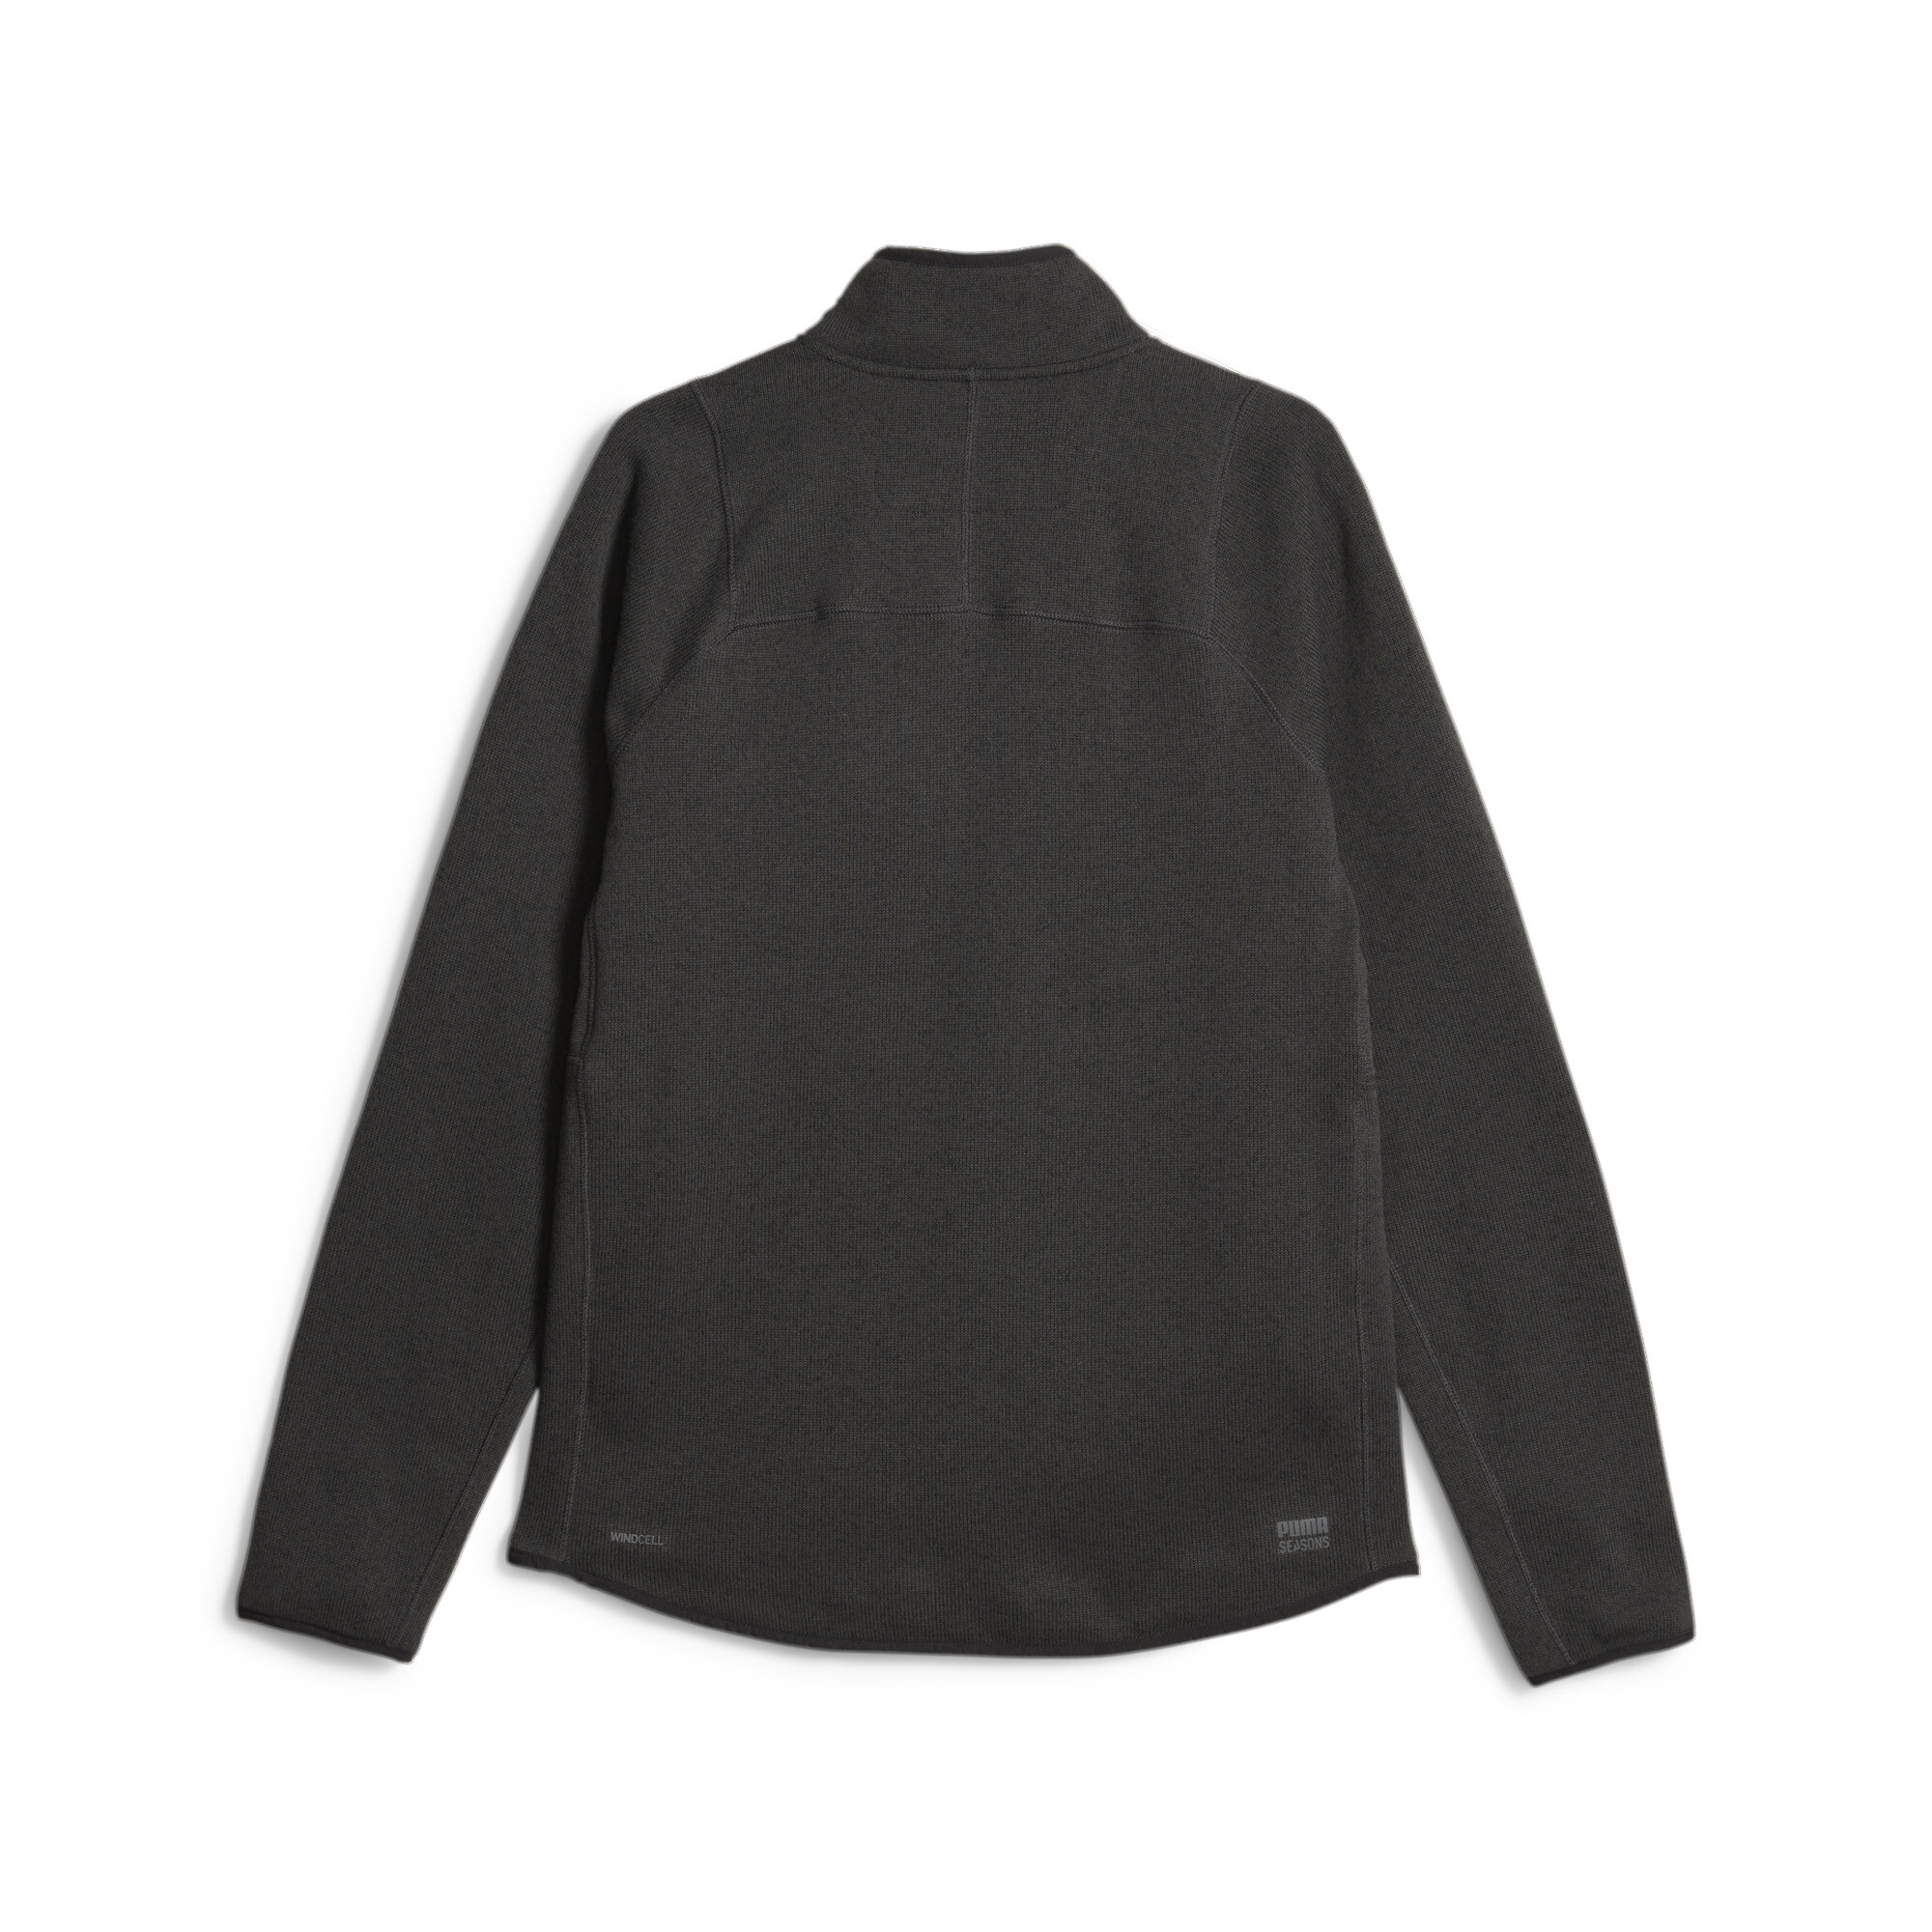 Men's PUMA SEASONS Half-zip Sweater In Heather, Size Large